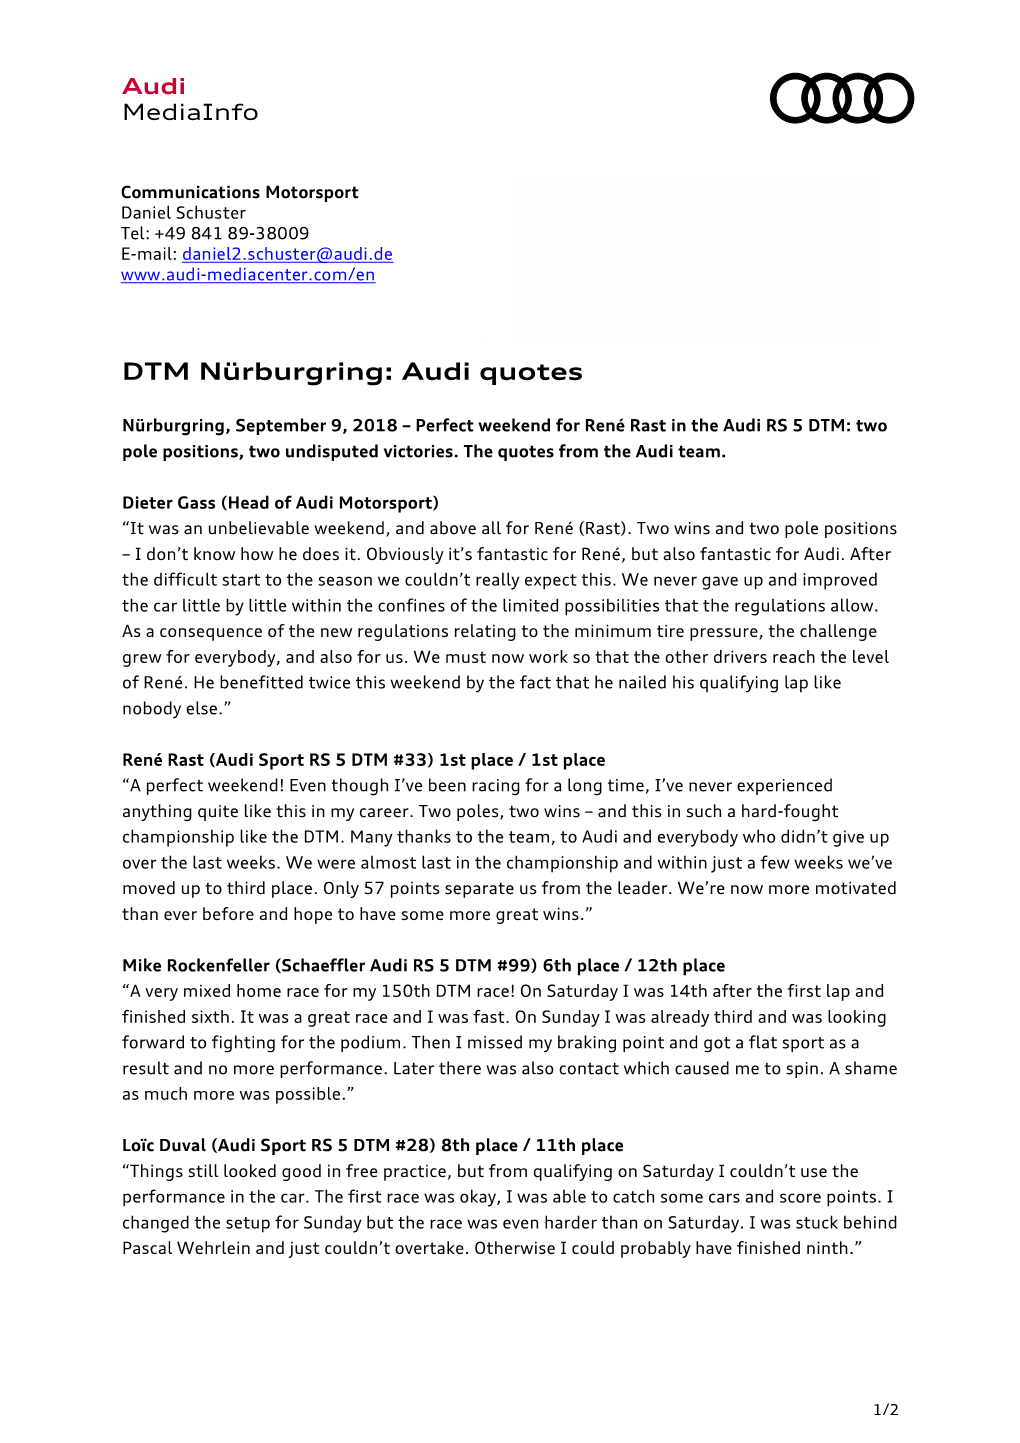 DTM Nürburgring: Audi Quotes